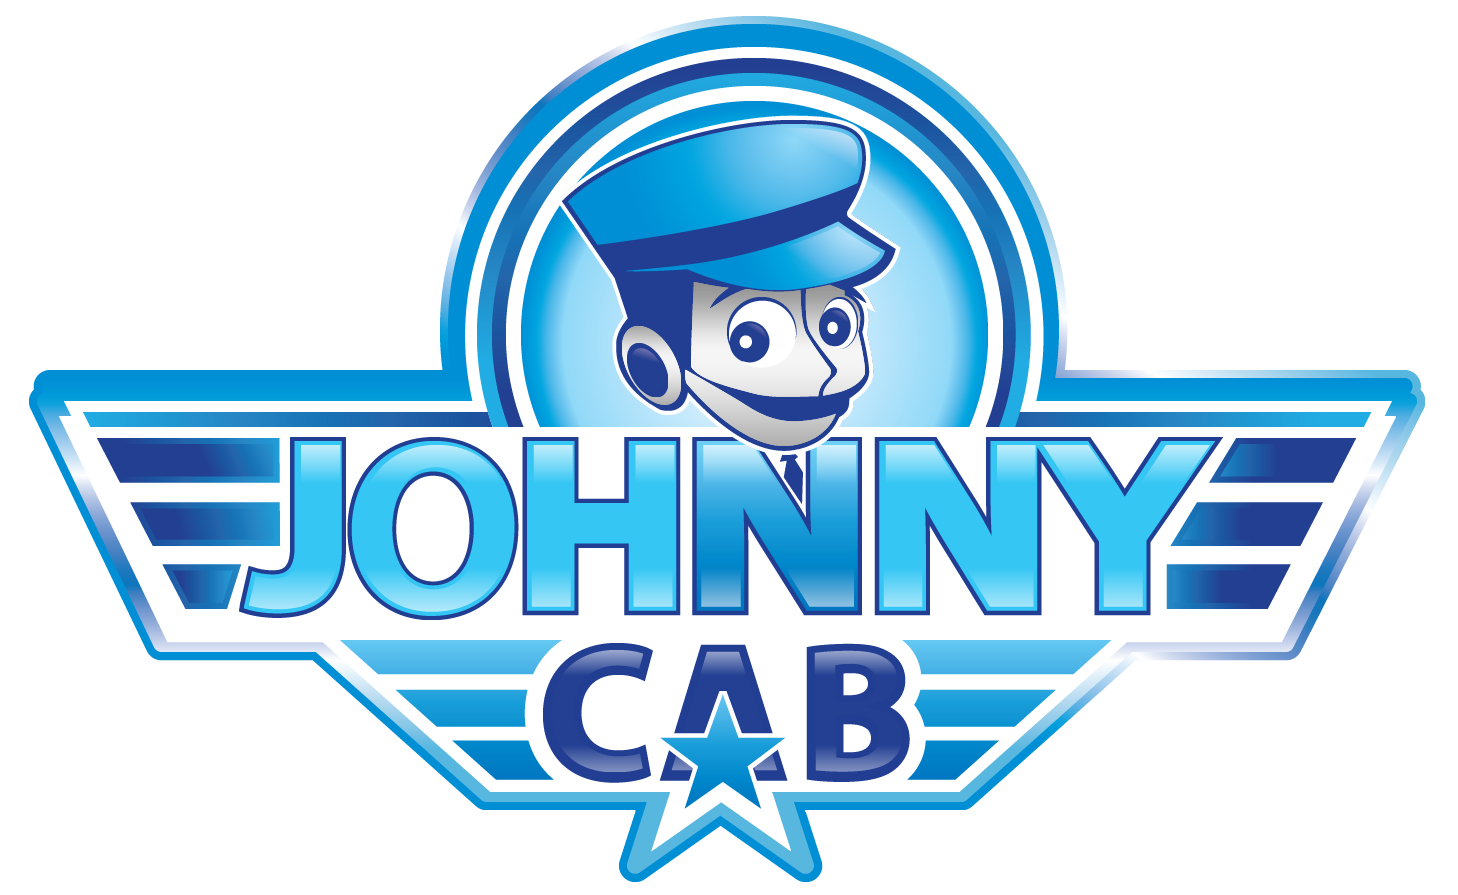 Johnny Cab